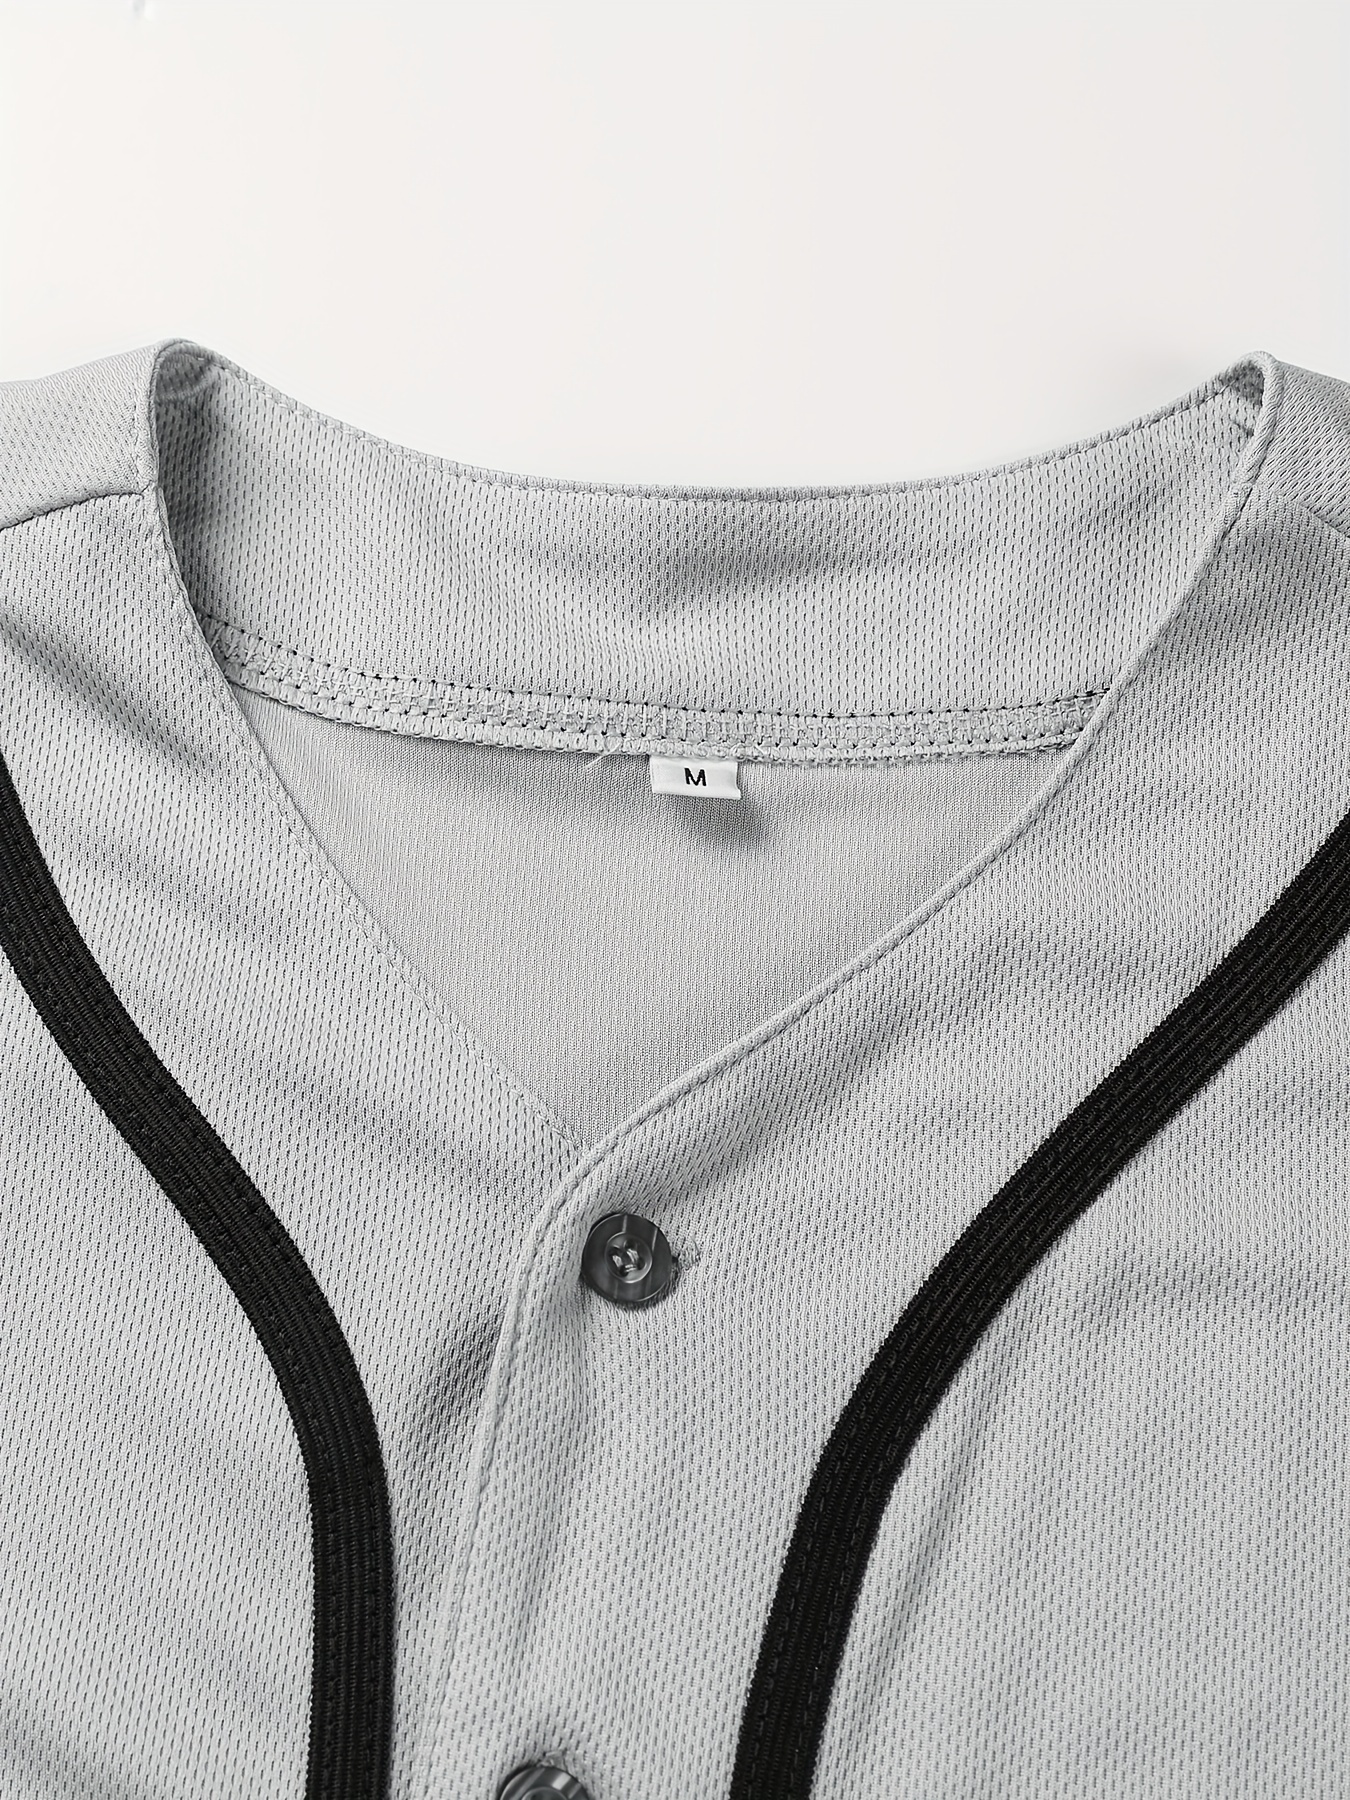 Fashion Blank Baseball Jersey Plain Button-Down Breathable Soft